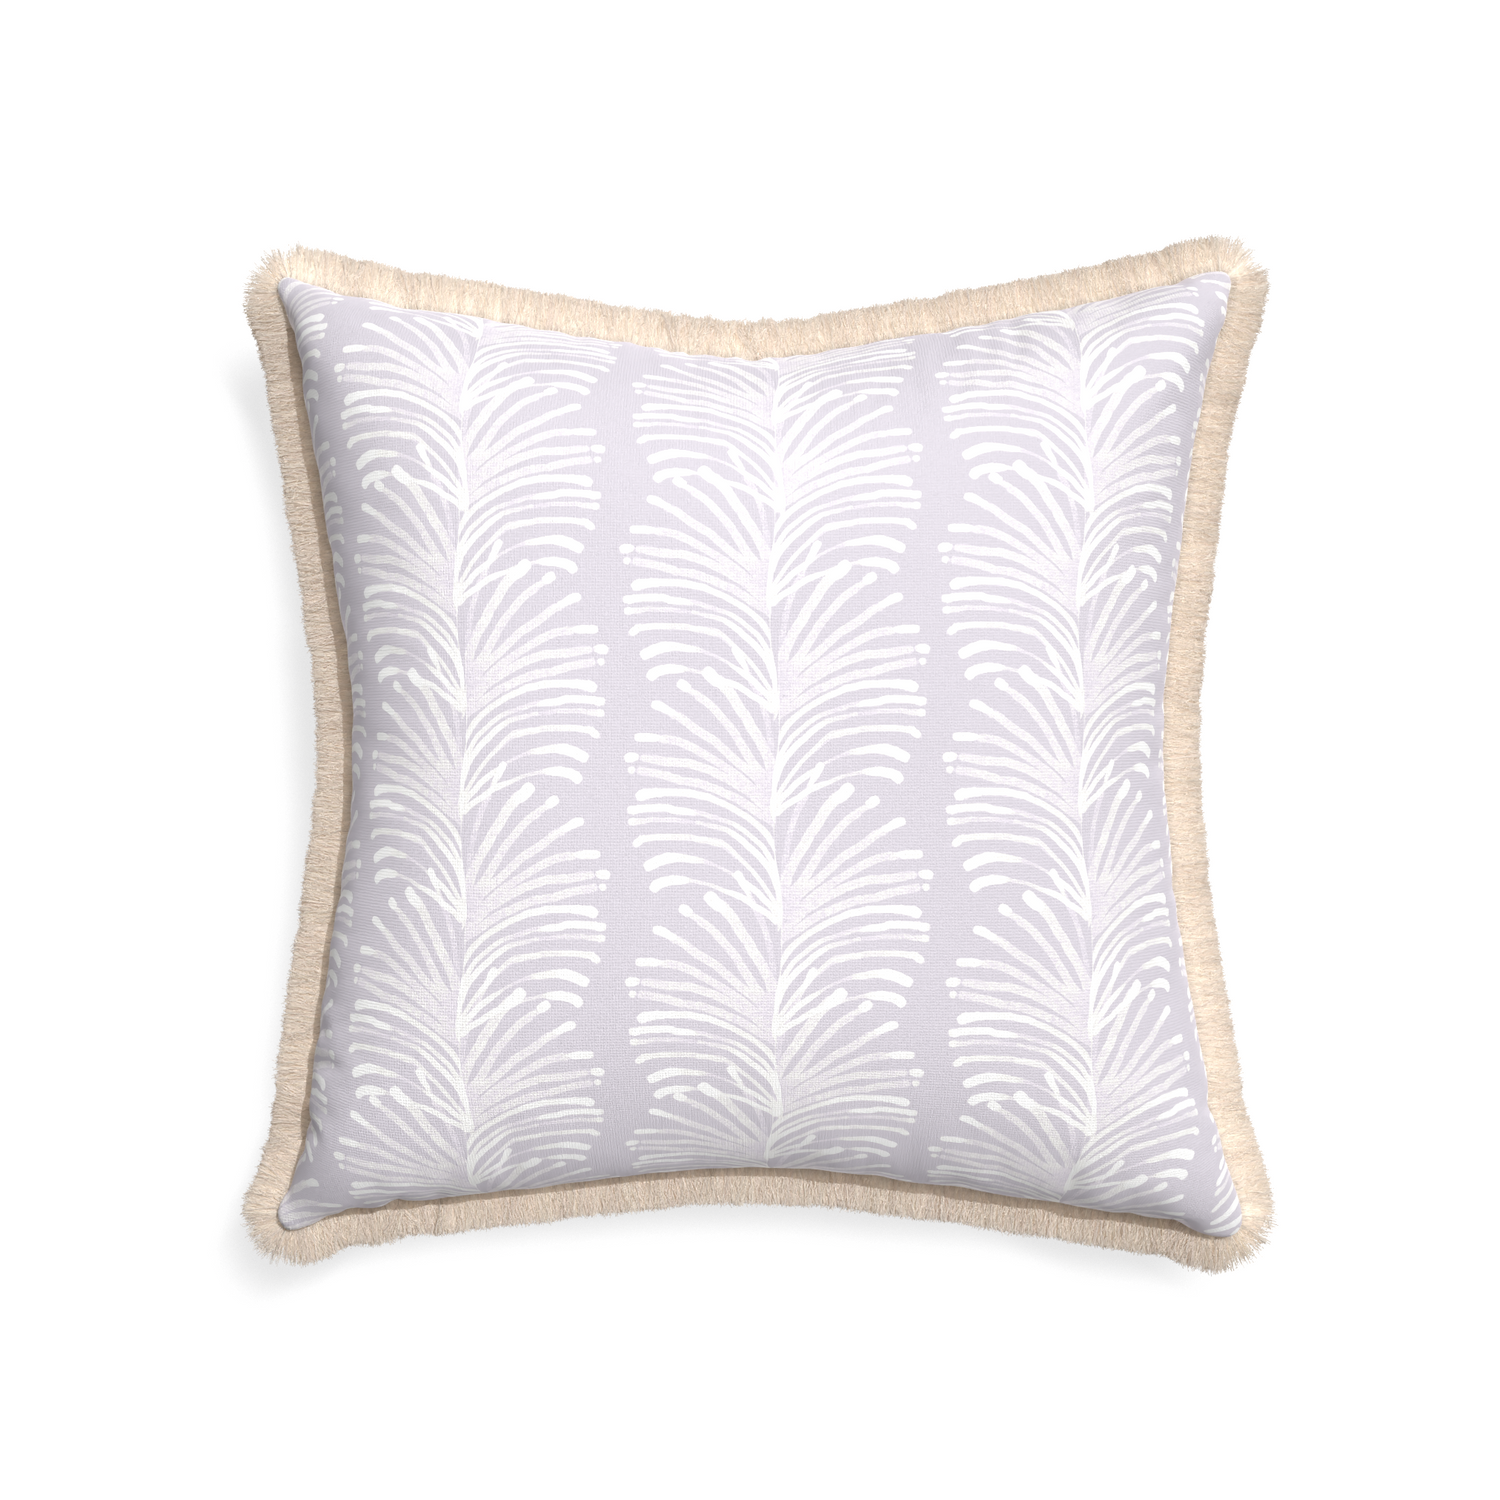 22-square emma lavender custom pillow with cream fringe on white background